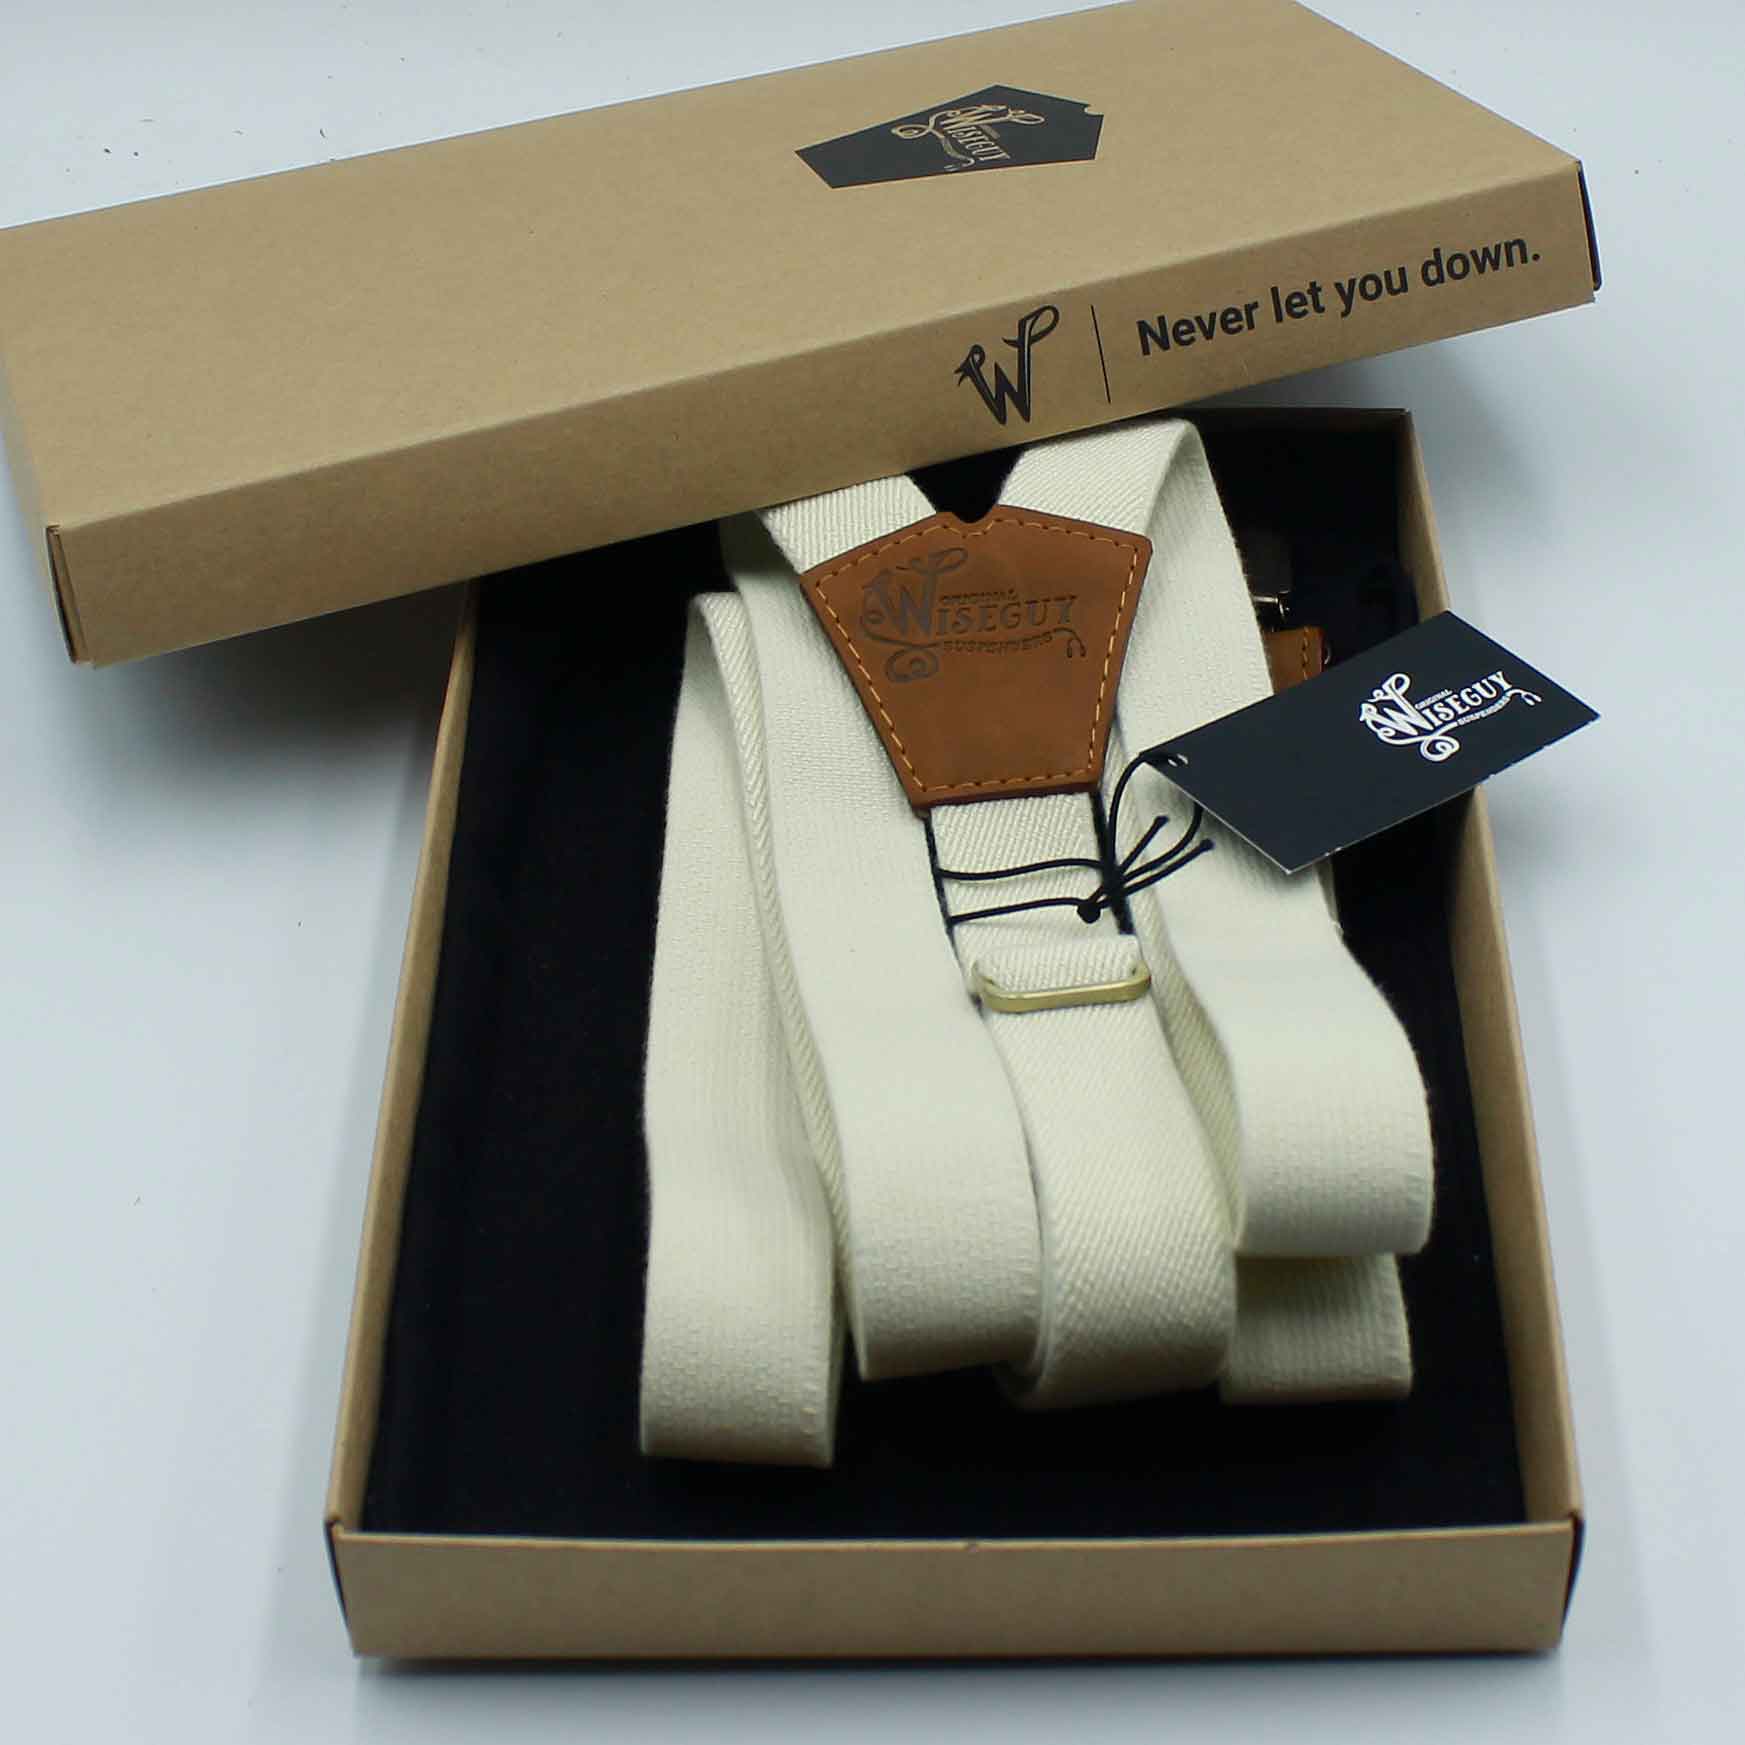 The Ivory Suspenders on Camel Brown & Brass slim straps (1 inch/ 2.5 cm) - Wiseguy Suspenders